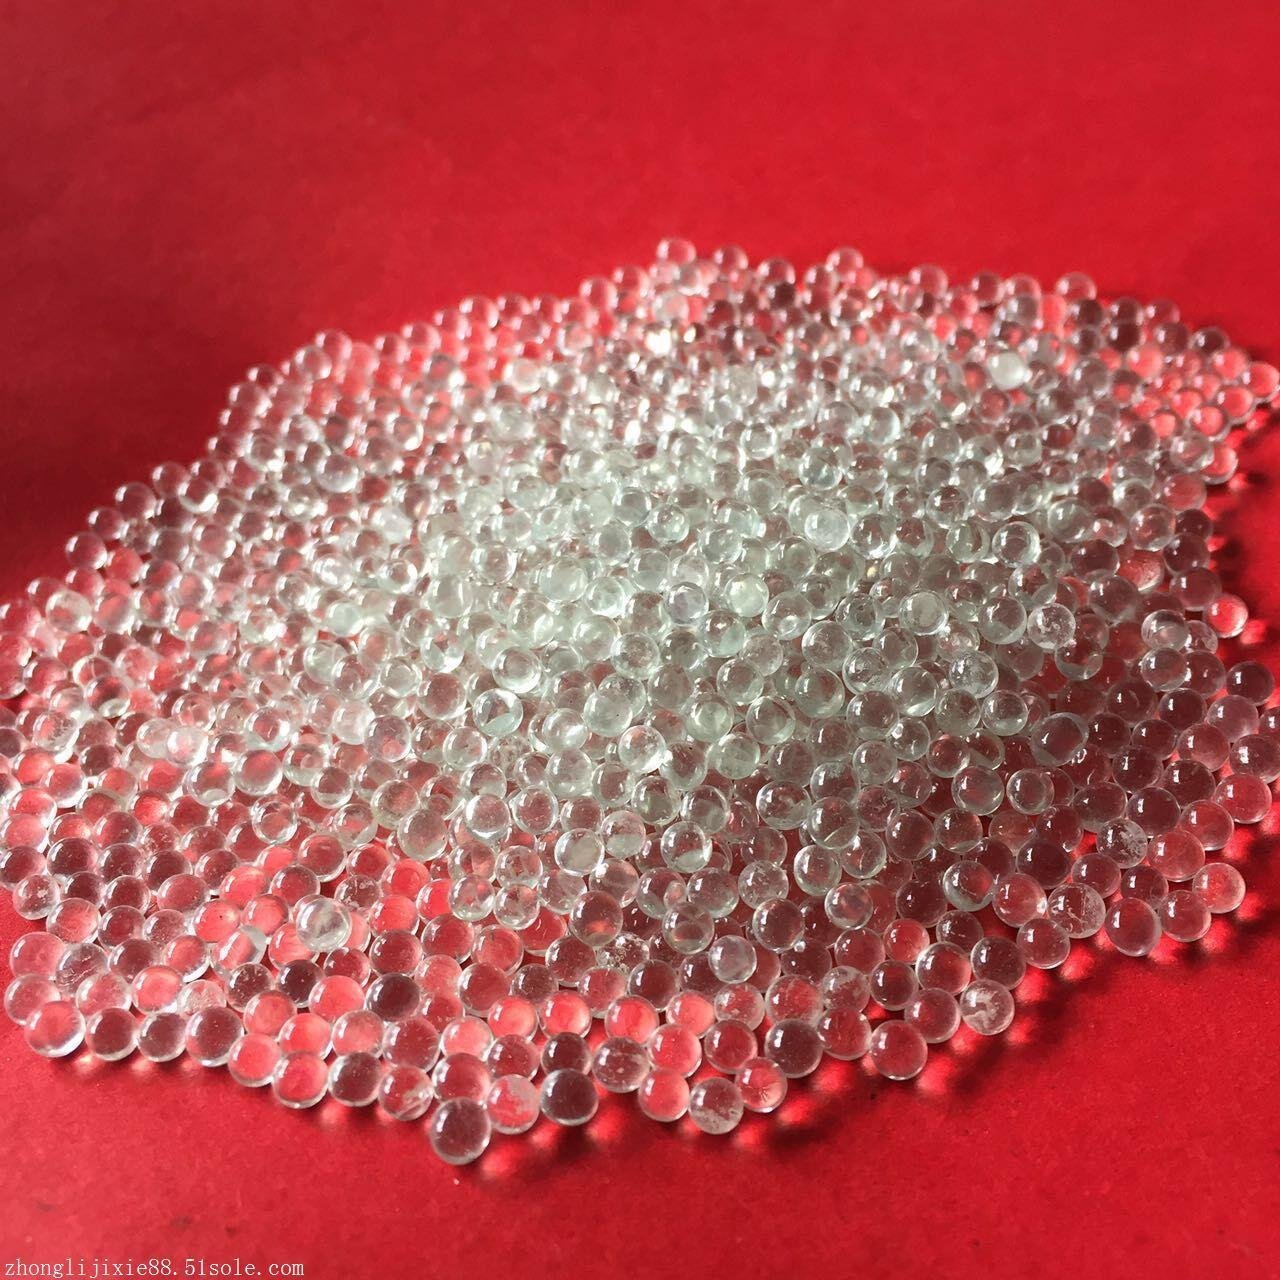 Abrasive Blasting Glass Beads 0-850um 2